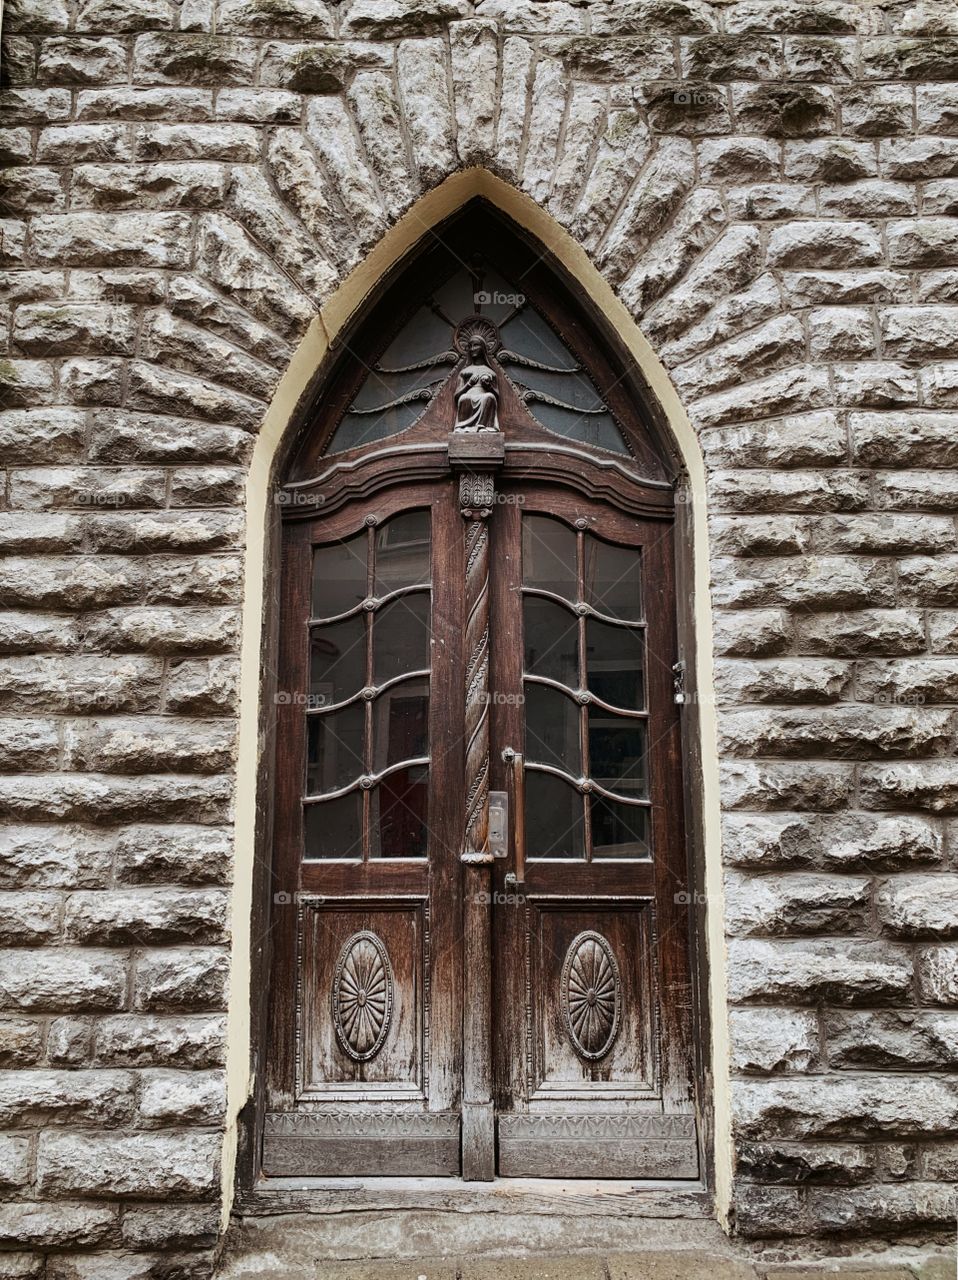 Another amazing old door in Old Tallinn!